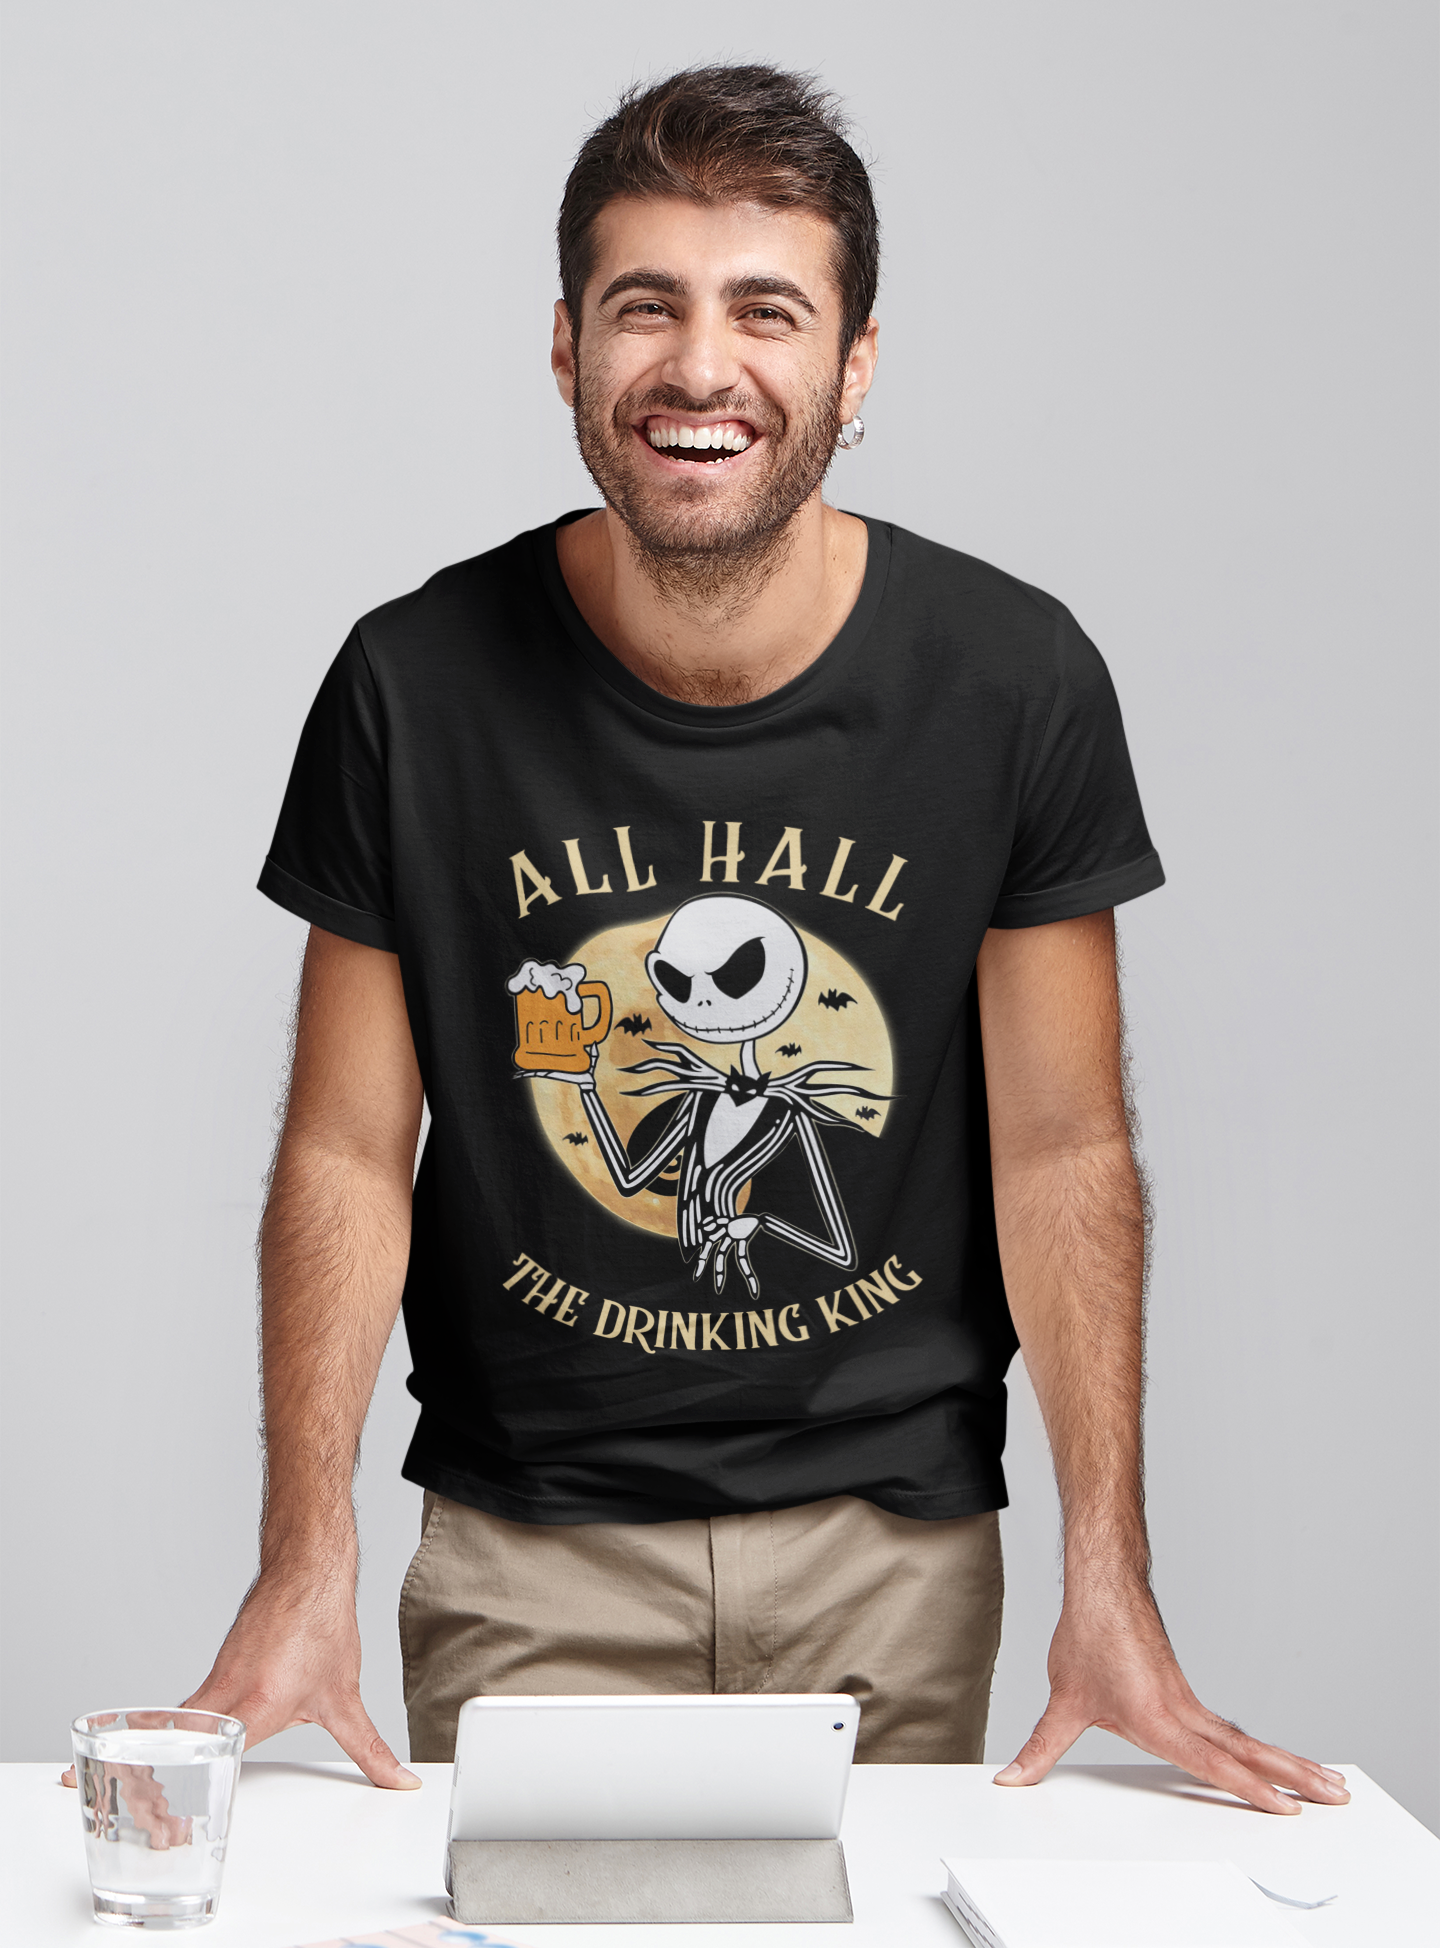 Nightmare Before Christmas T Shirt, Jack Skellington T Shirt, All Hall The Drinking King Tshirt, Halloween Gifts